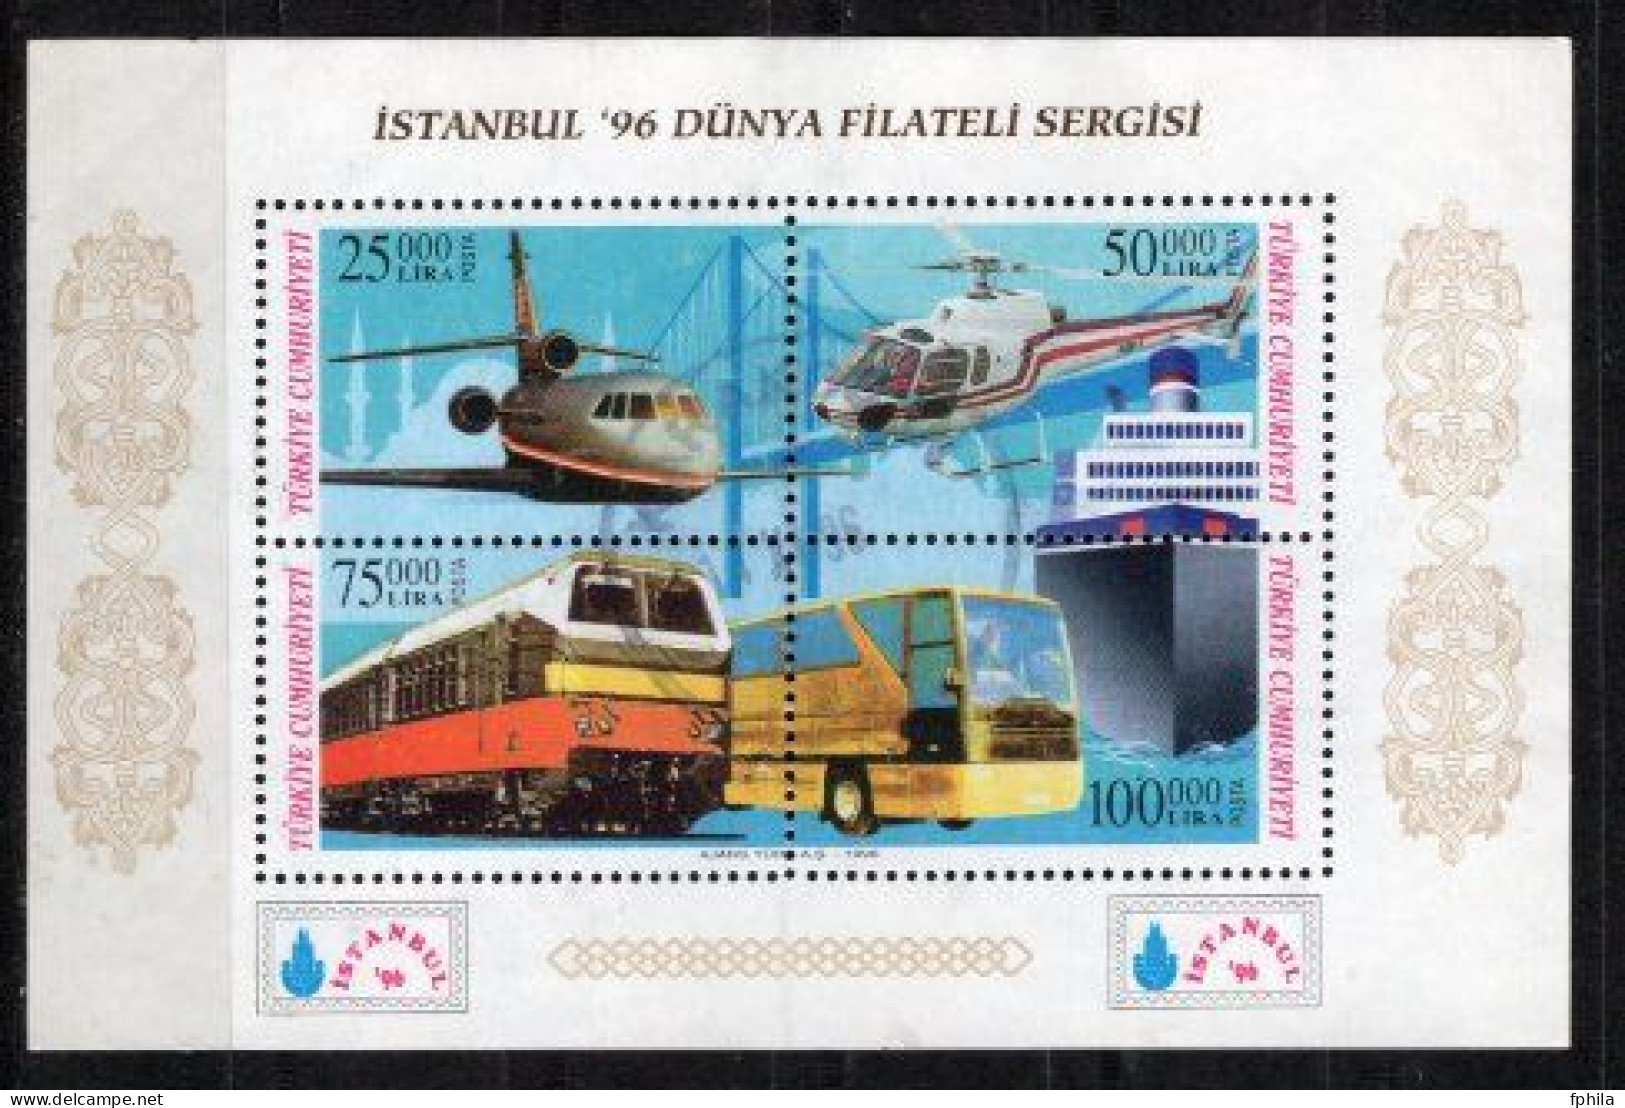 1996 TURKEY ISTANBUL '96 WORLD PHILATELIC EXHIBITION - VEHICLES SOUVENIR SHEET USED - Blocks & Sheetlets